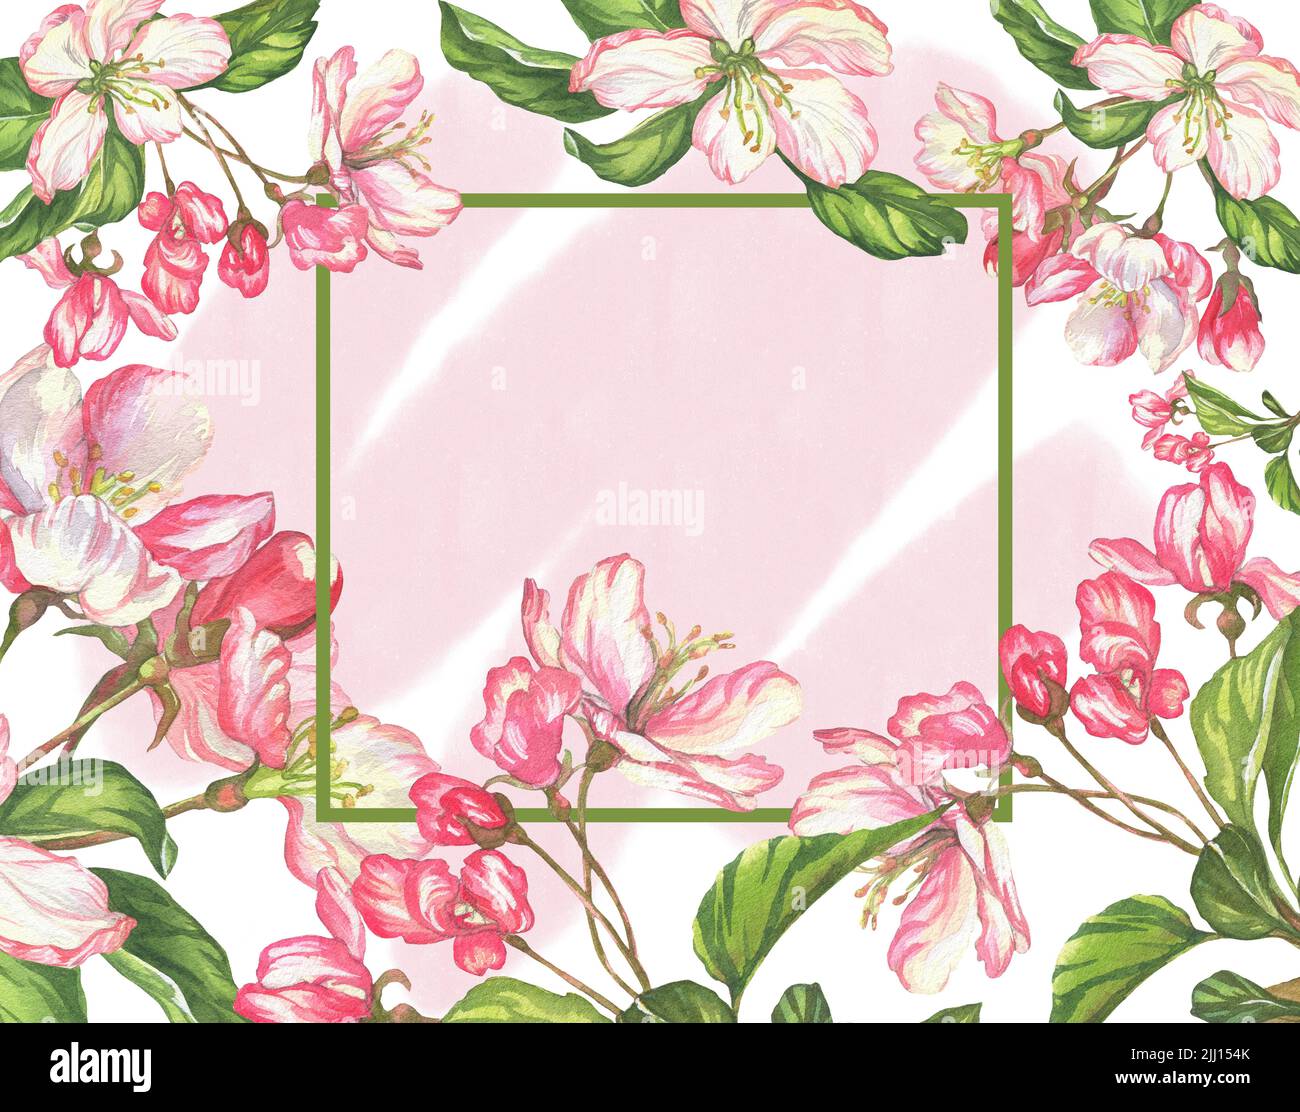 flores. acuarela ilustración botánica flores cerezos. marco para cartas e  invitaciones Fotografía de stock - Alamy